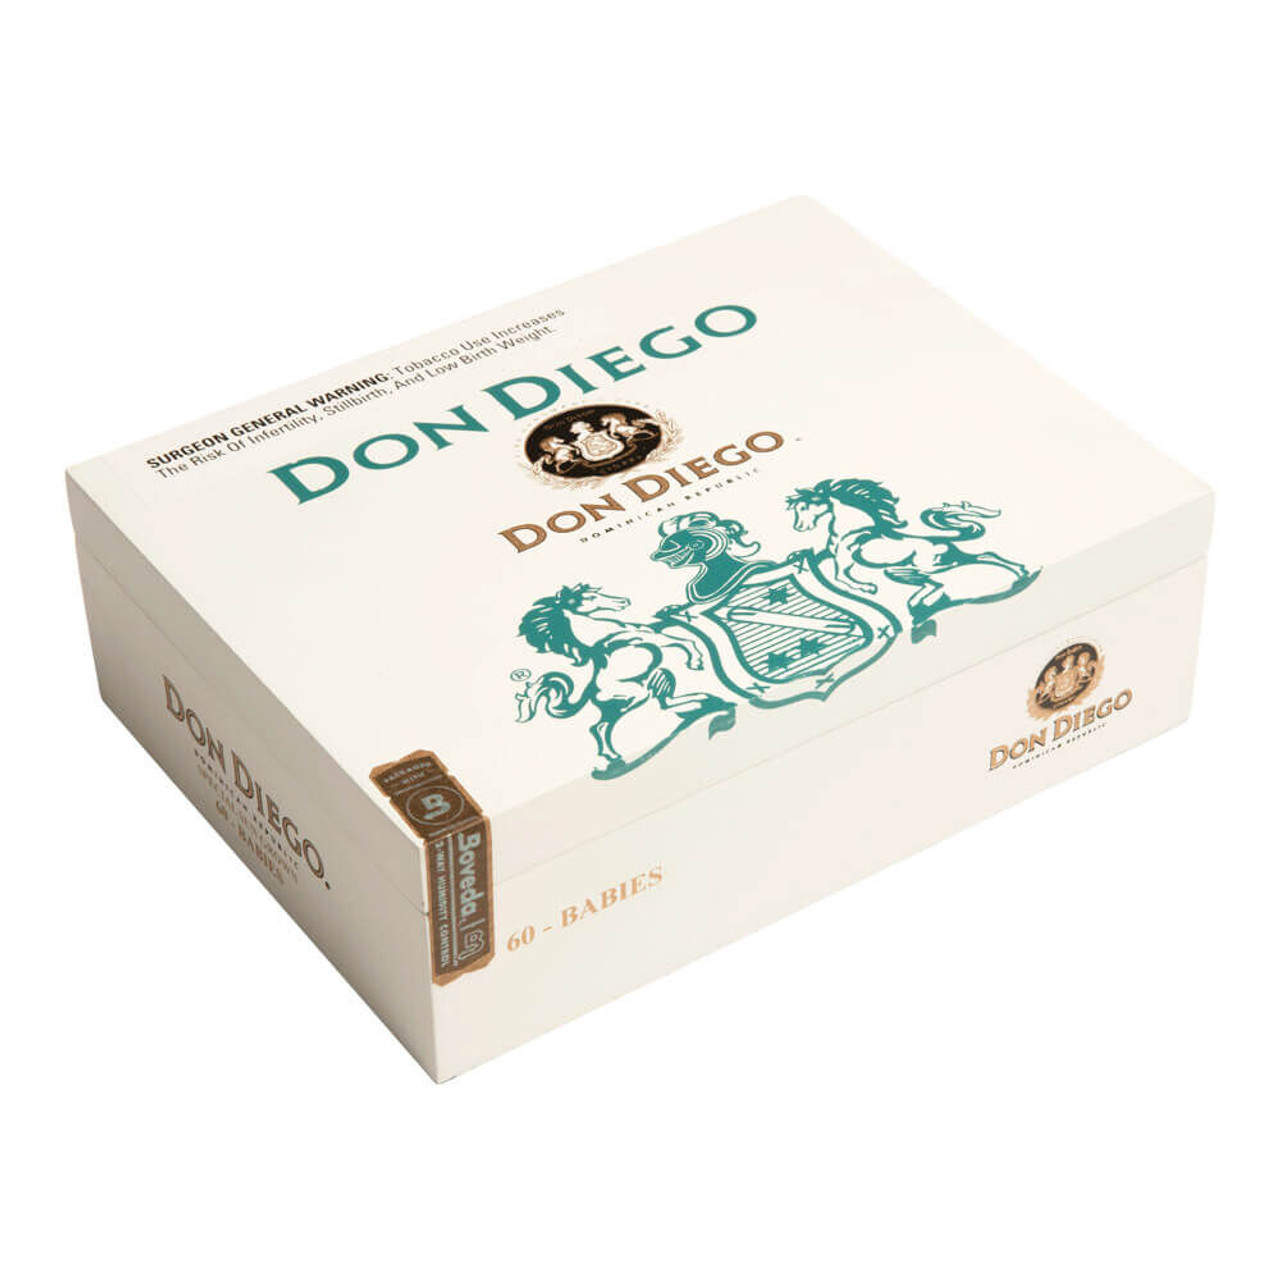 Don Diego Babies Cigars - 5.25 x 33 (Box of 60) *Box